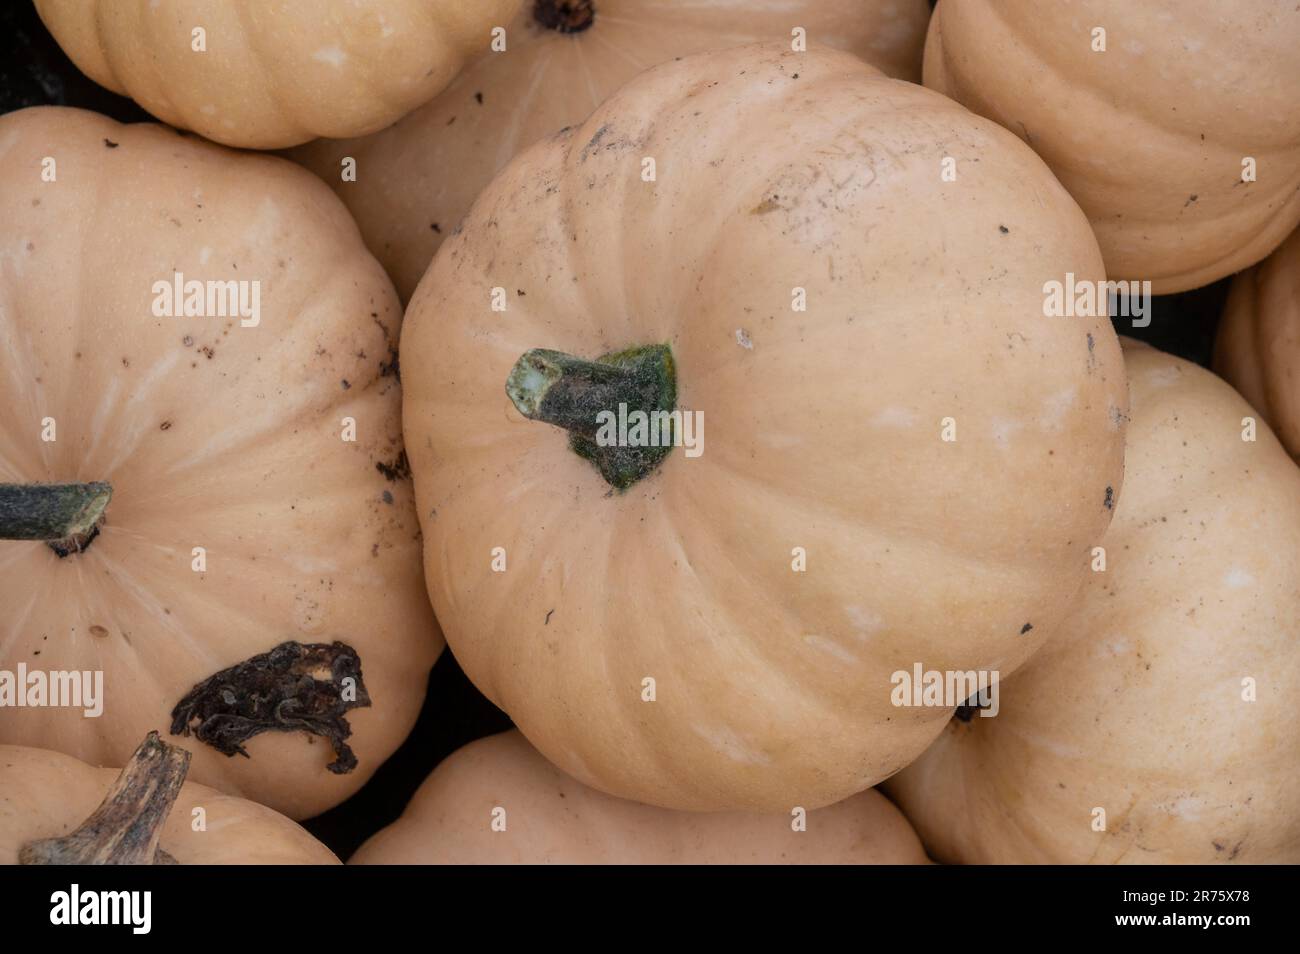 Italy, Trentino - Alto Adige, Alto Adige - South Tyrol, garden, pumpkin family, pumpkins (Cucurbita), muscat pumpkin, edible pumpkin Stock Photo